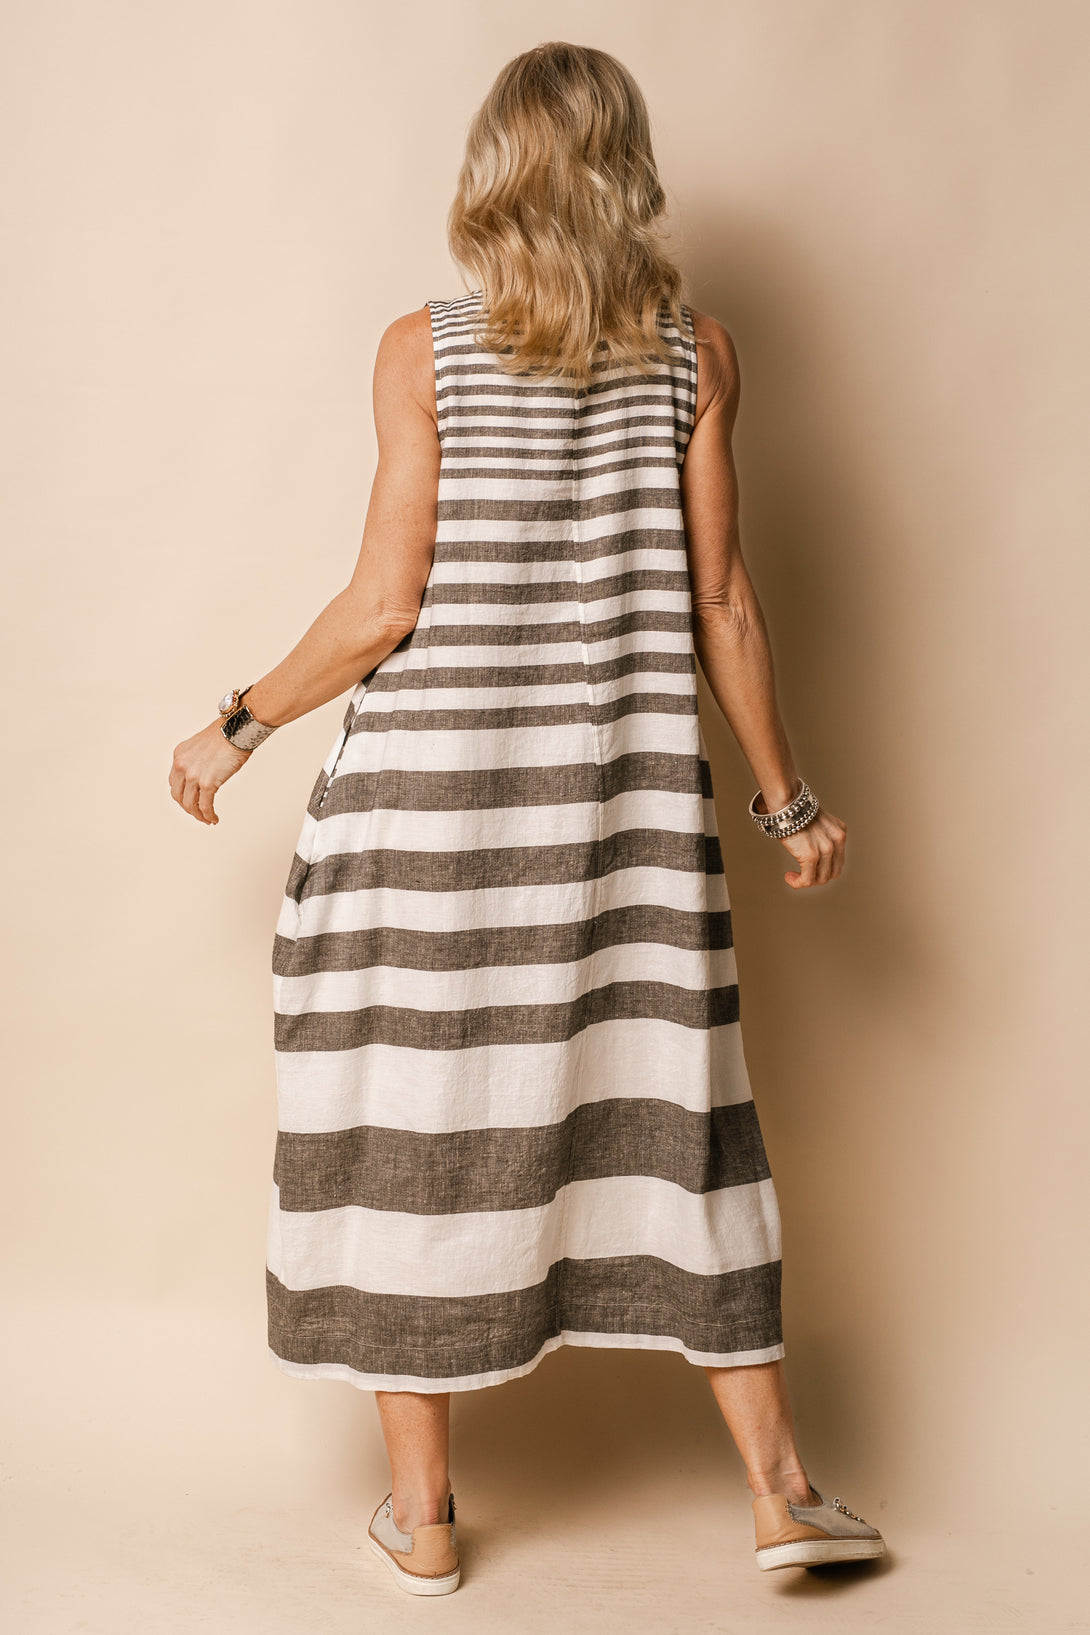 Joplin Linen Blend Dress in Khaki - Imagine Fashion